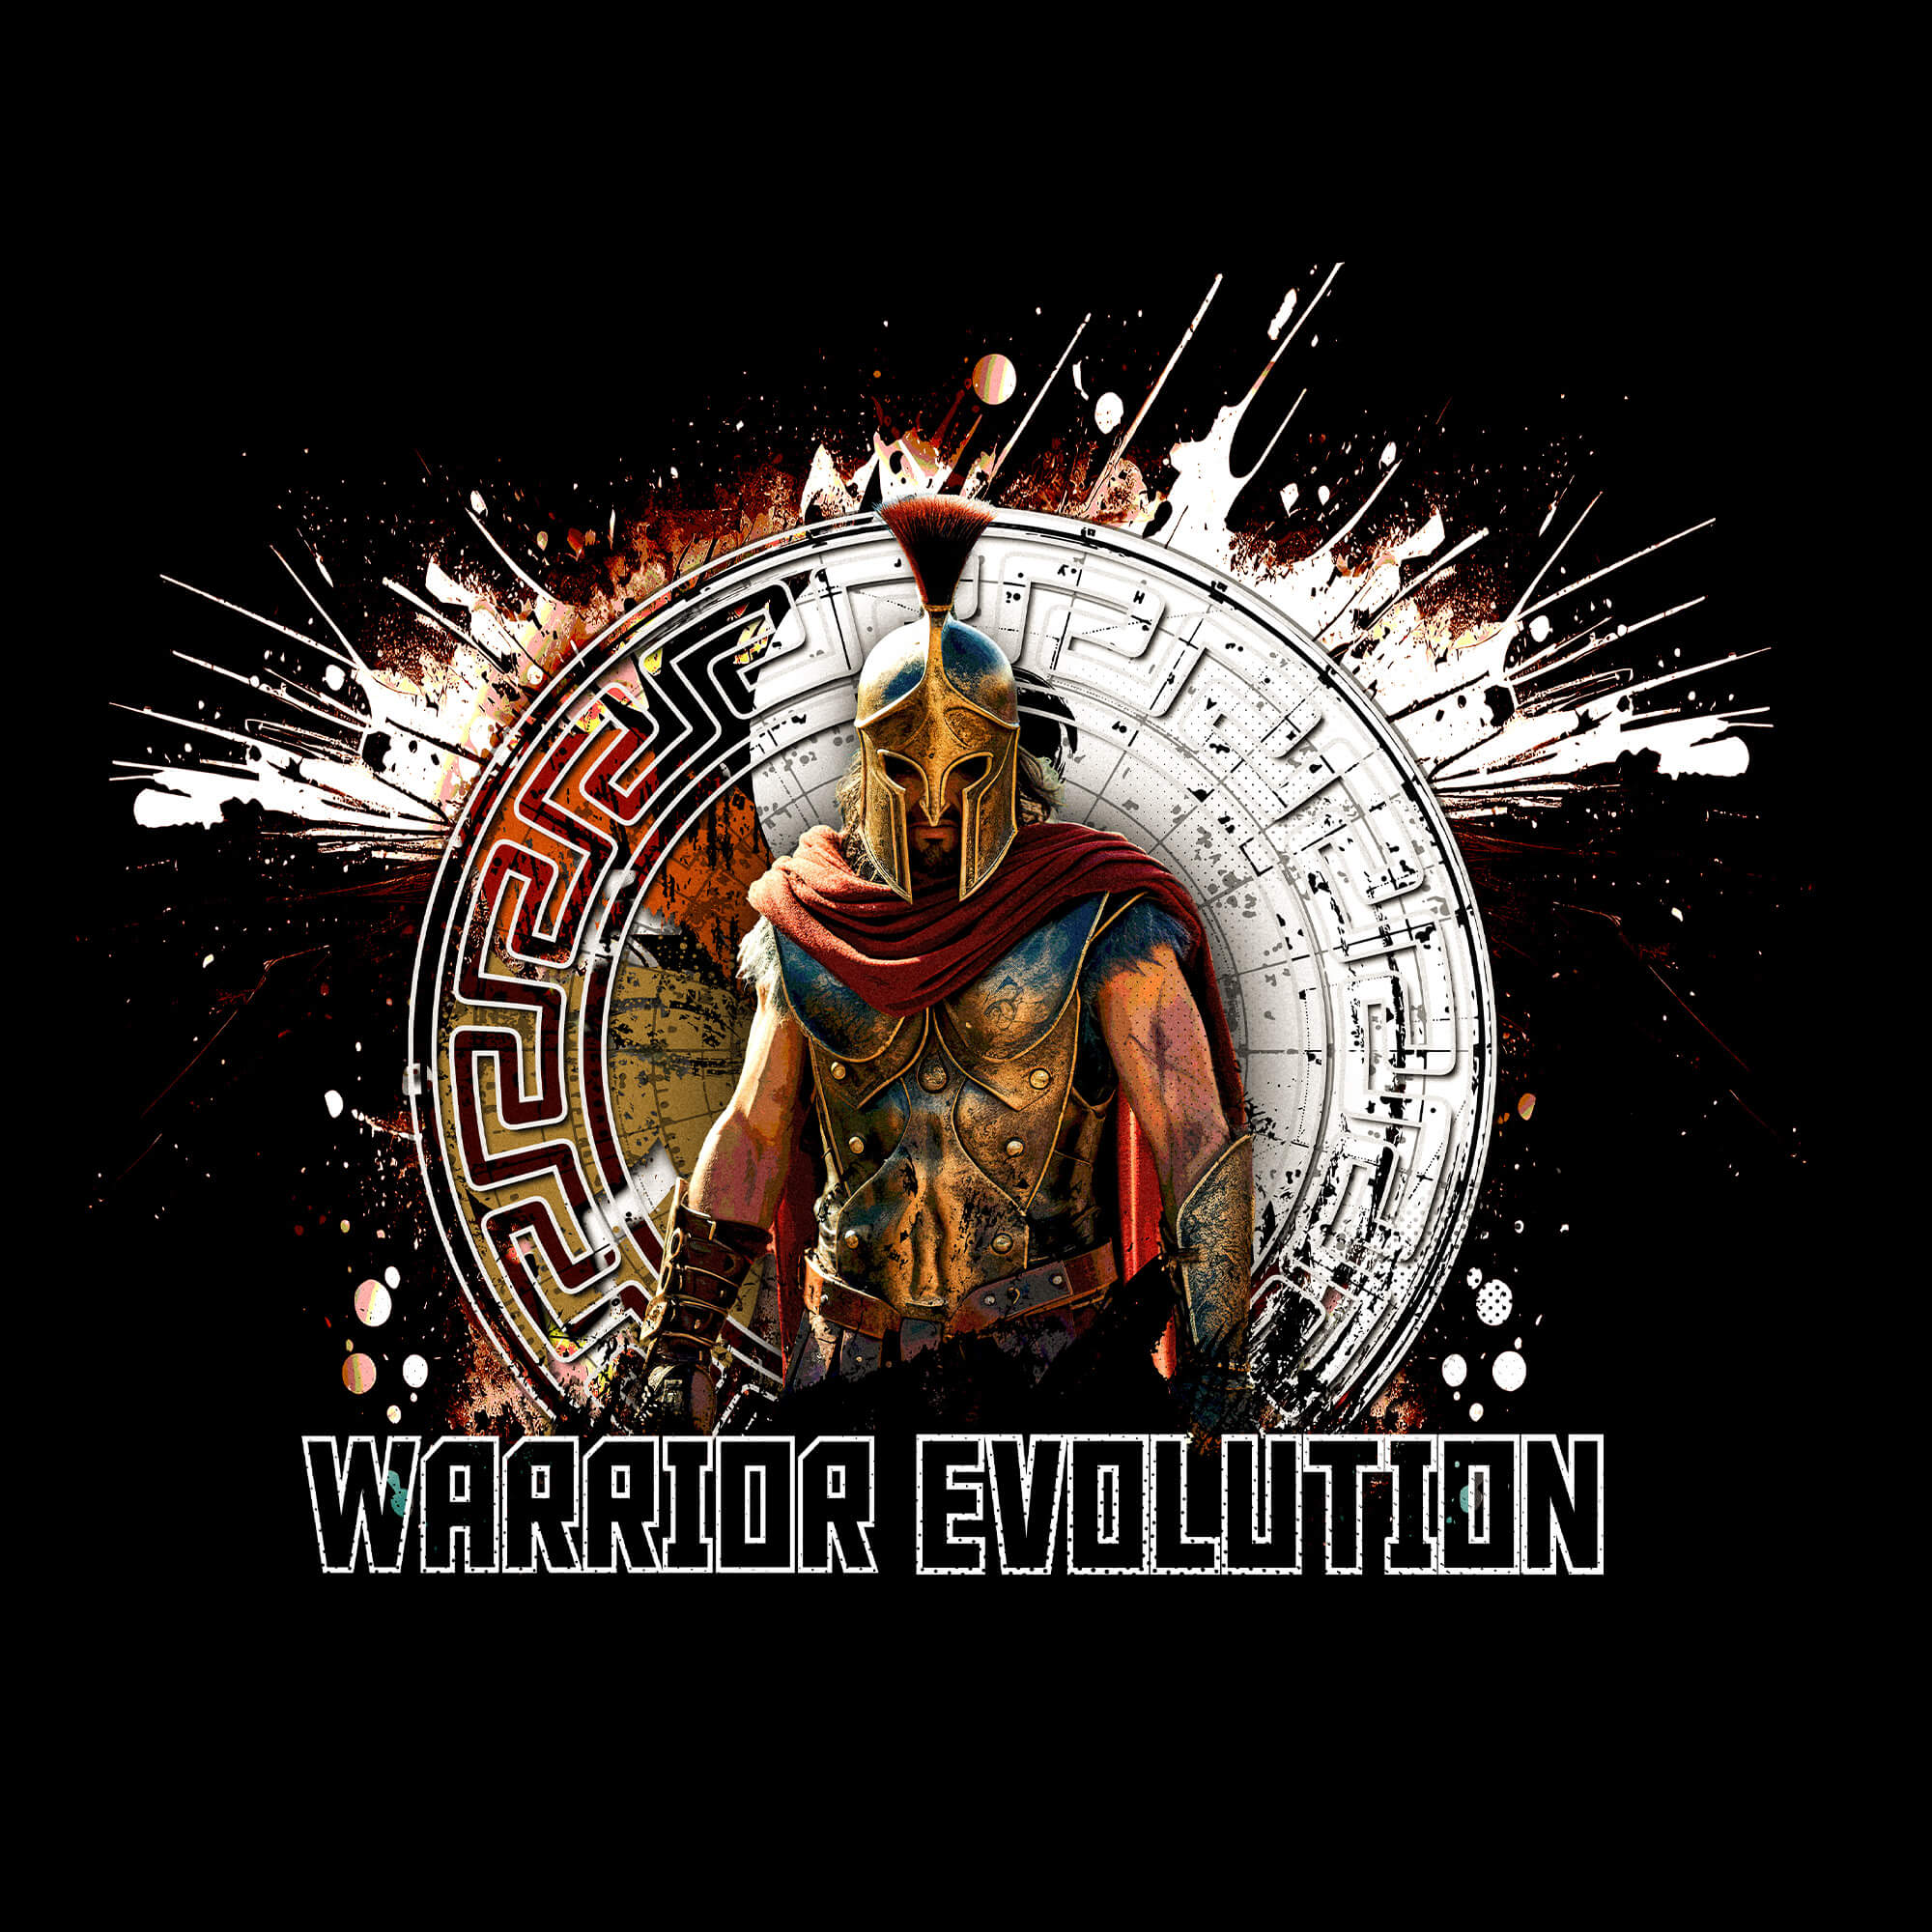 Example Custom Digital Artwork graphic design Services for jiu jitsu academies warrior evolution by Eagr Ones